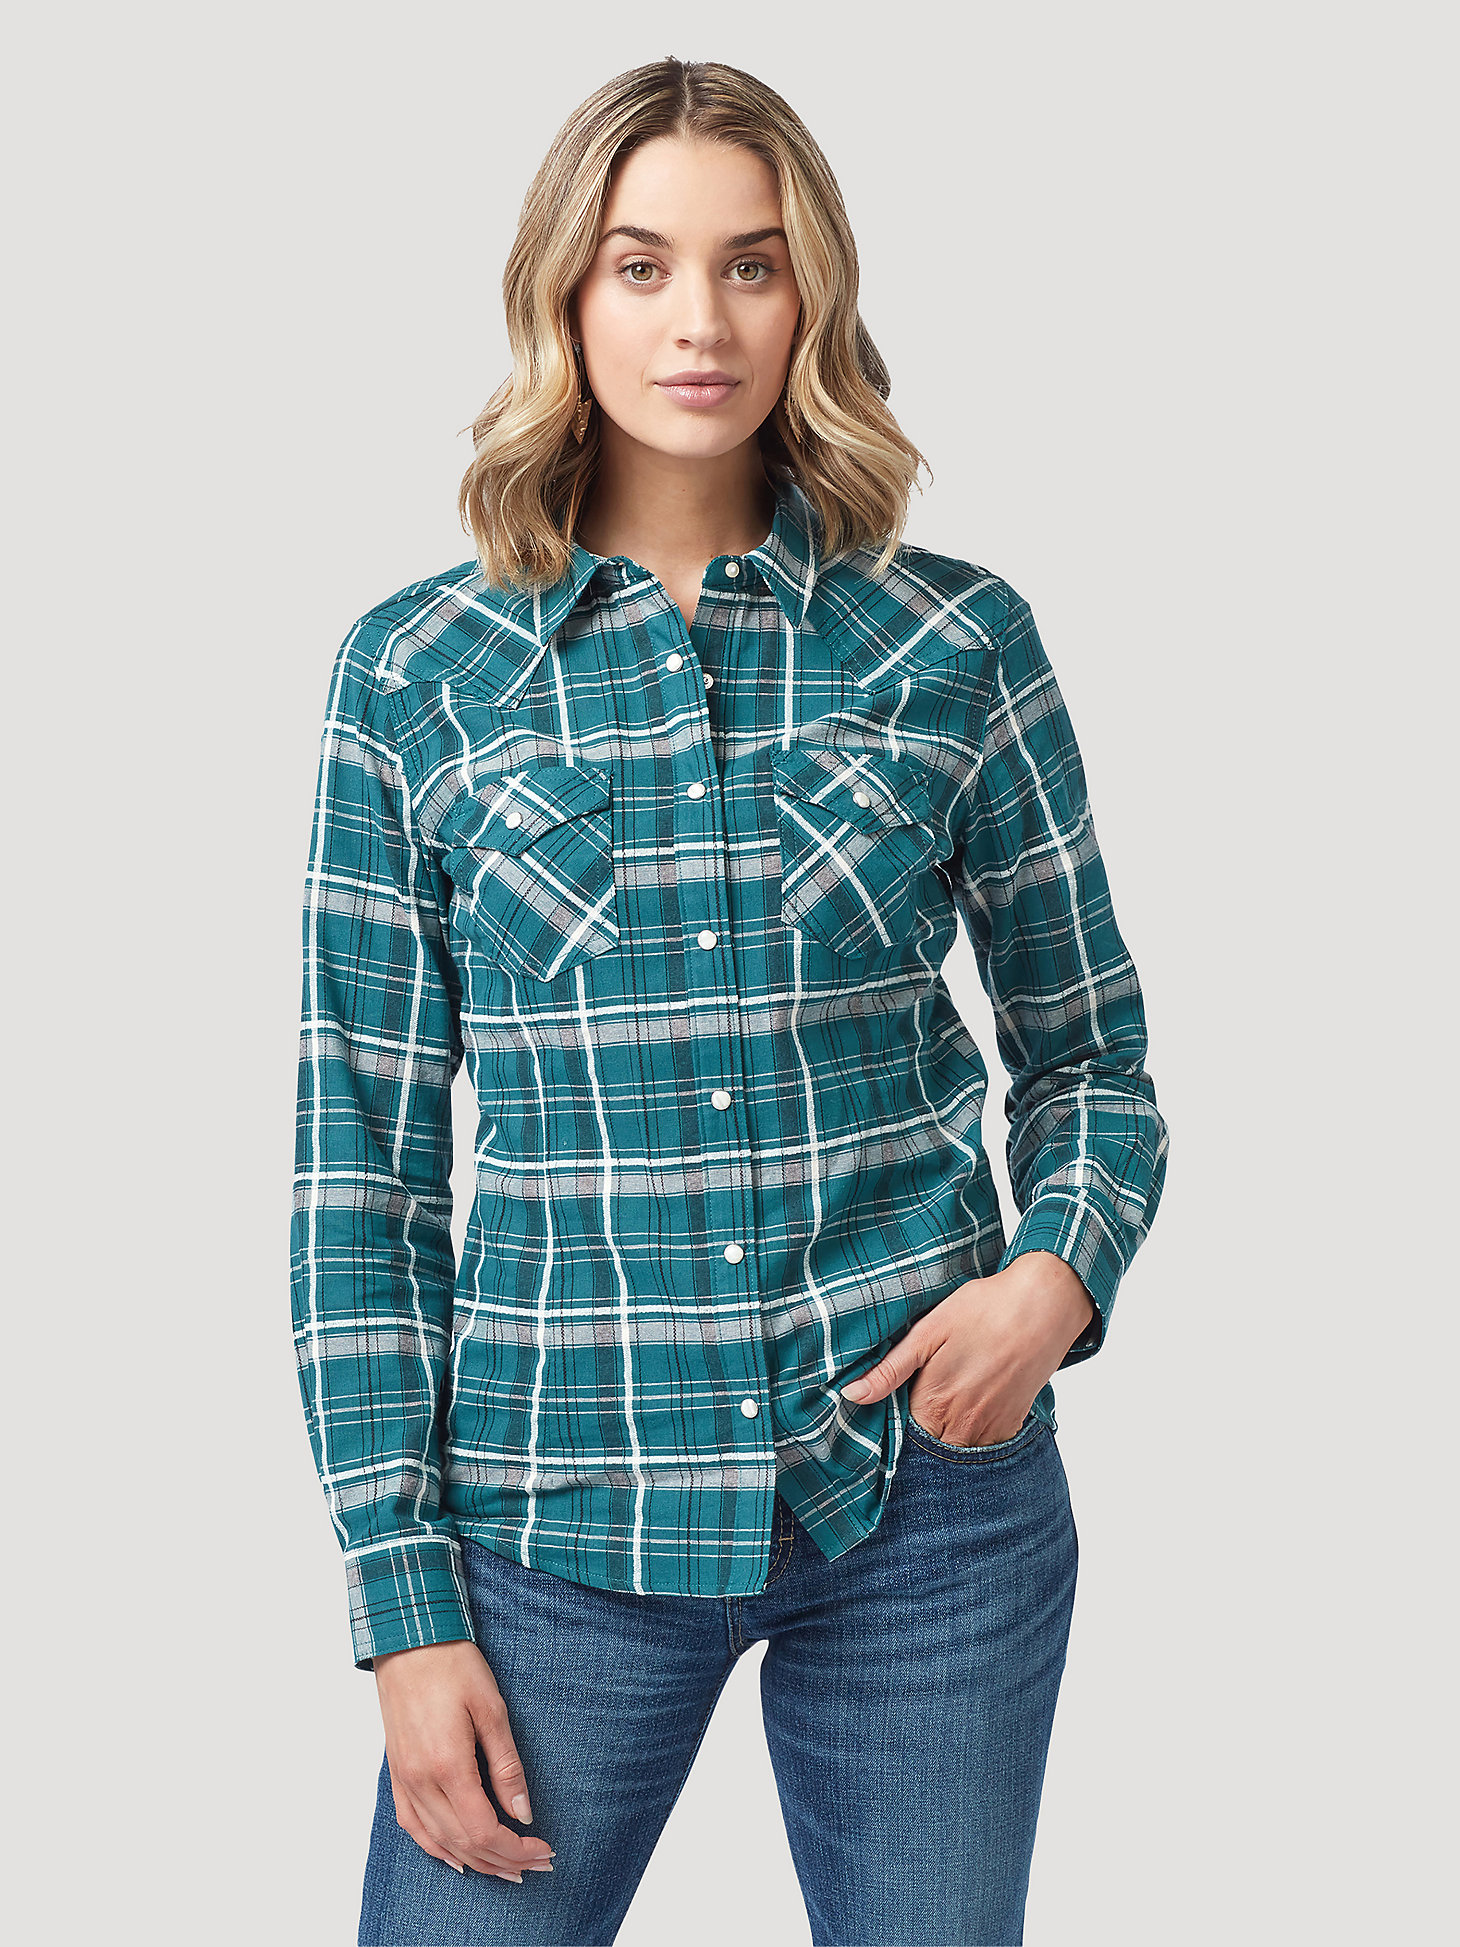 Women's Wrangler Retro® Textured Western Snap Shirt in Apatite alternative view 1